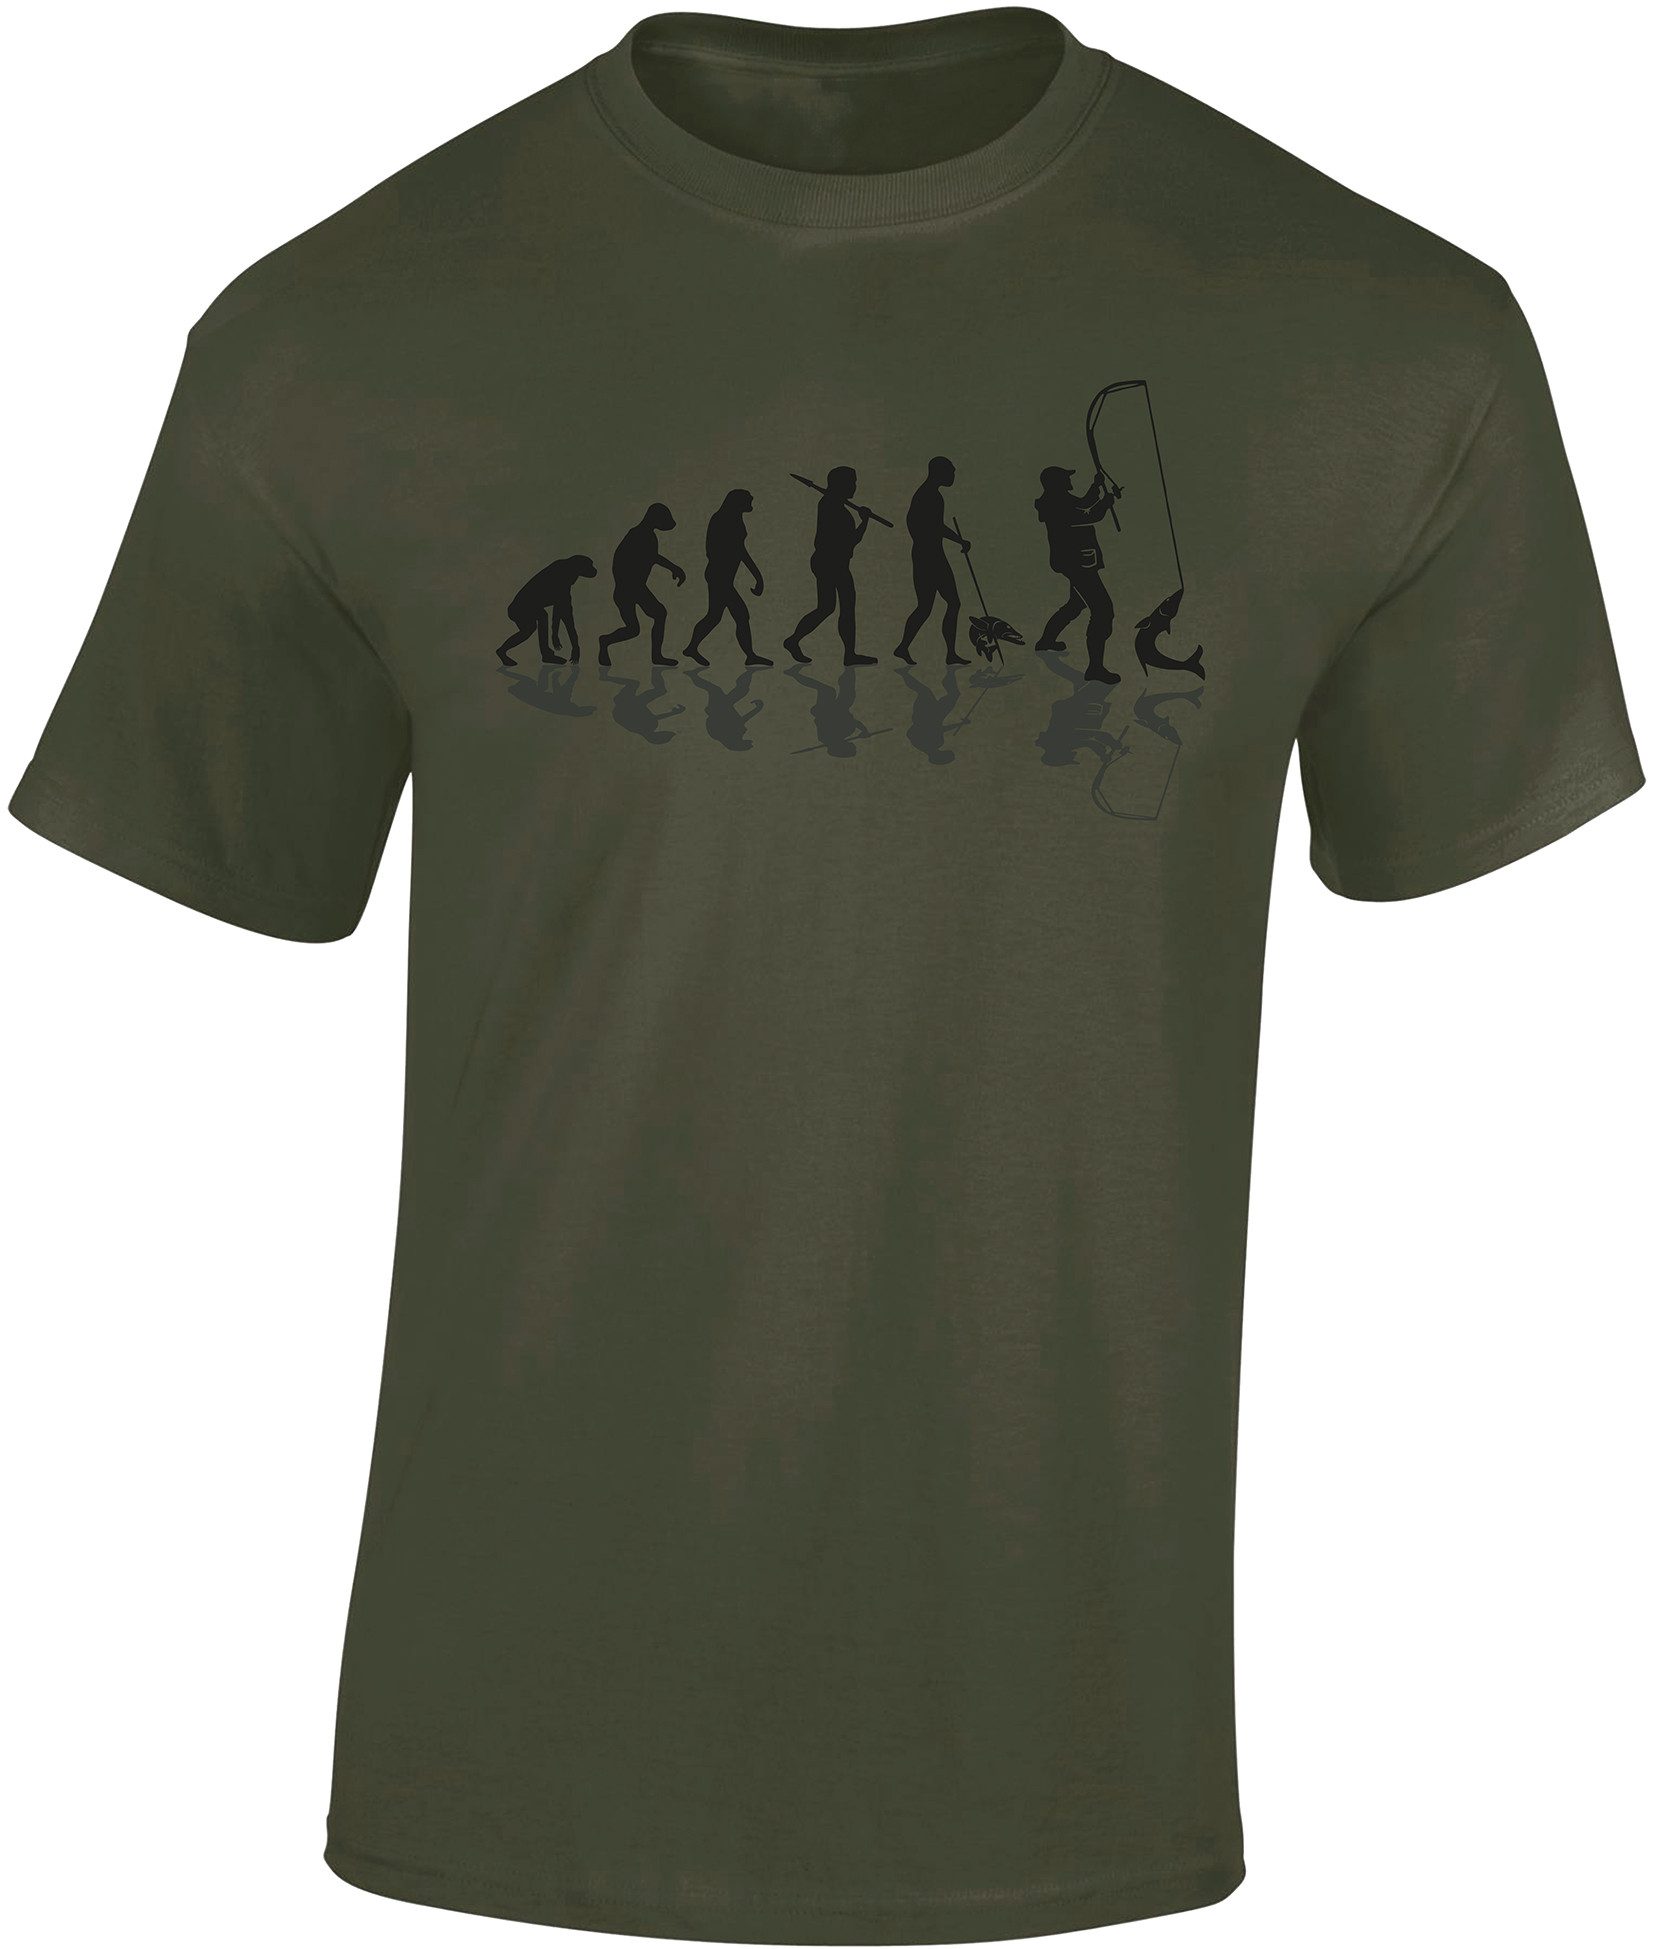 Baddery Print-Shirt Angel T-Shirt : Angler Evolution - Angler Geschenke, hochwertiger Siebdruck, aus Baumwolle